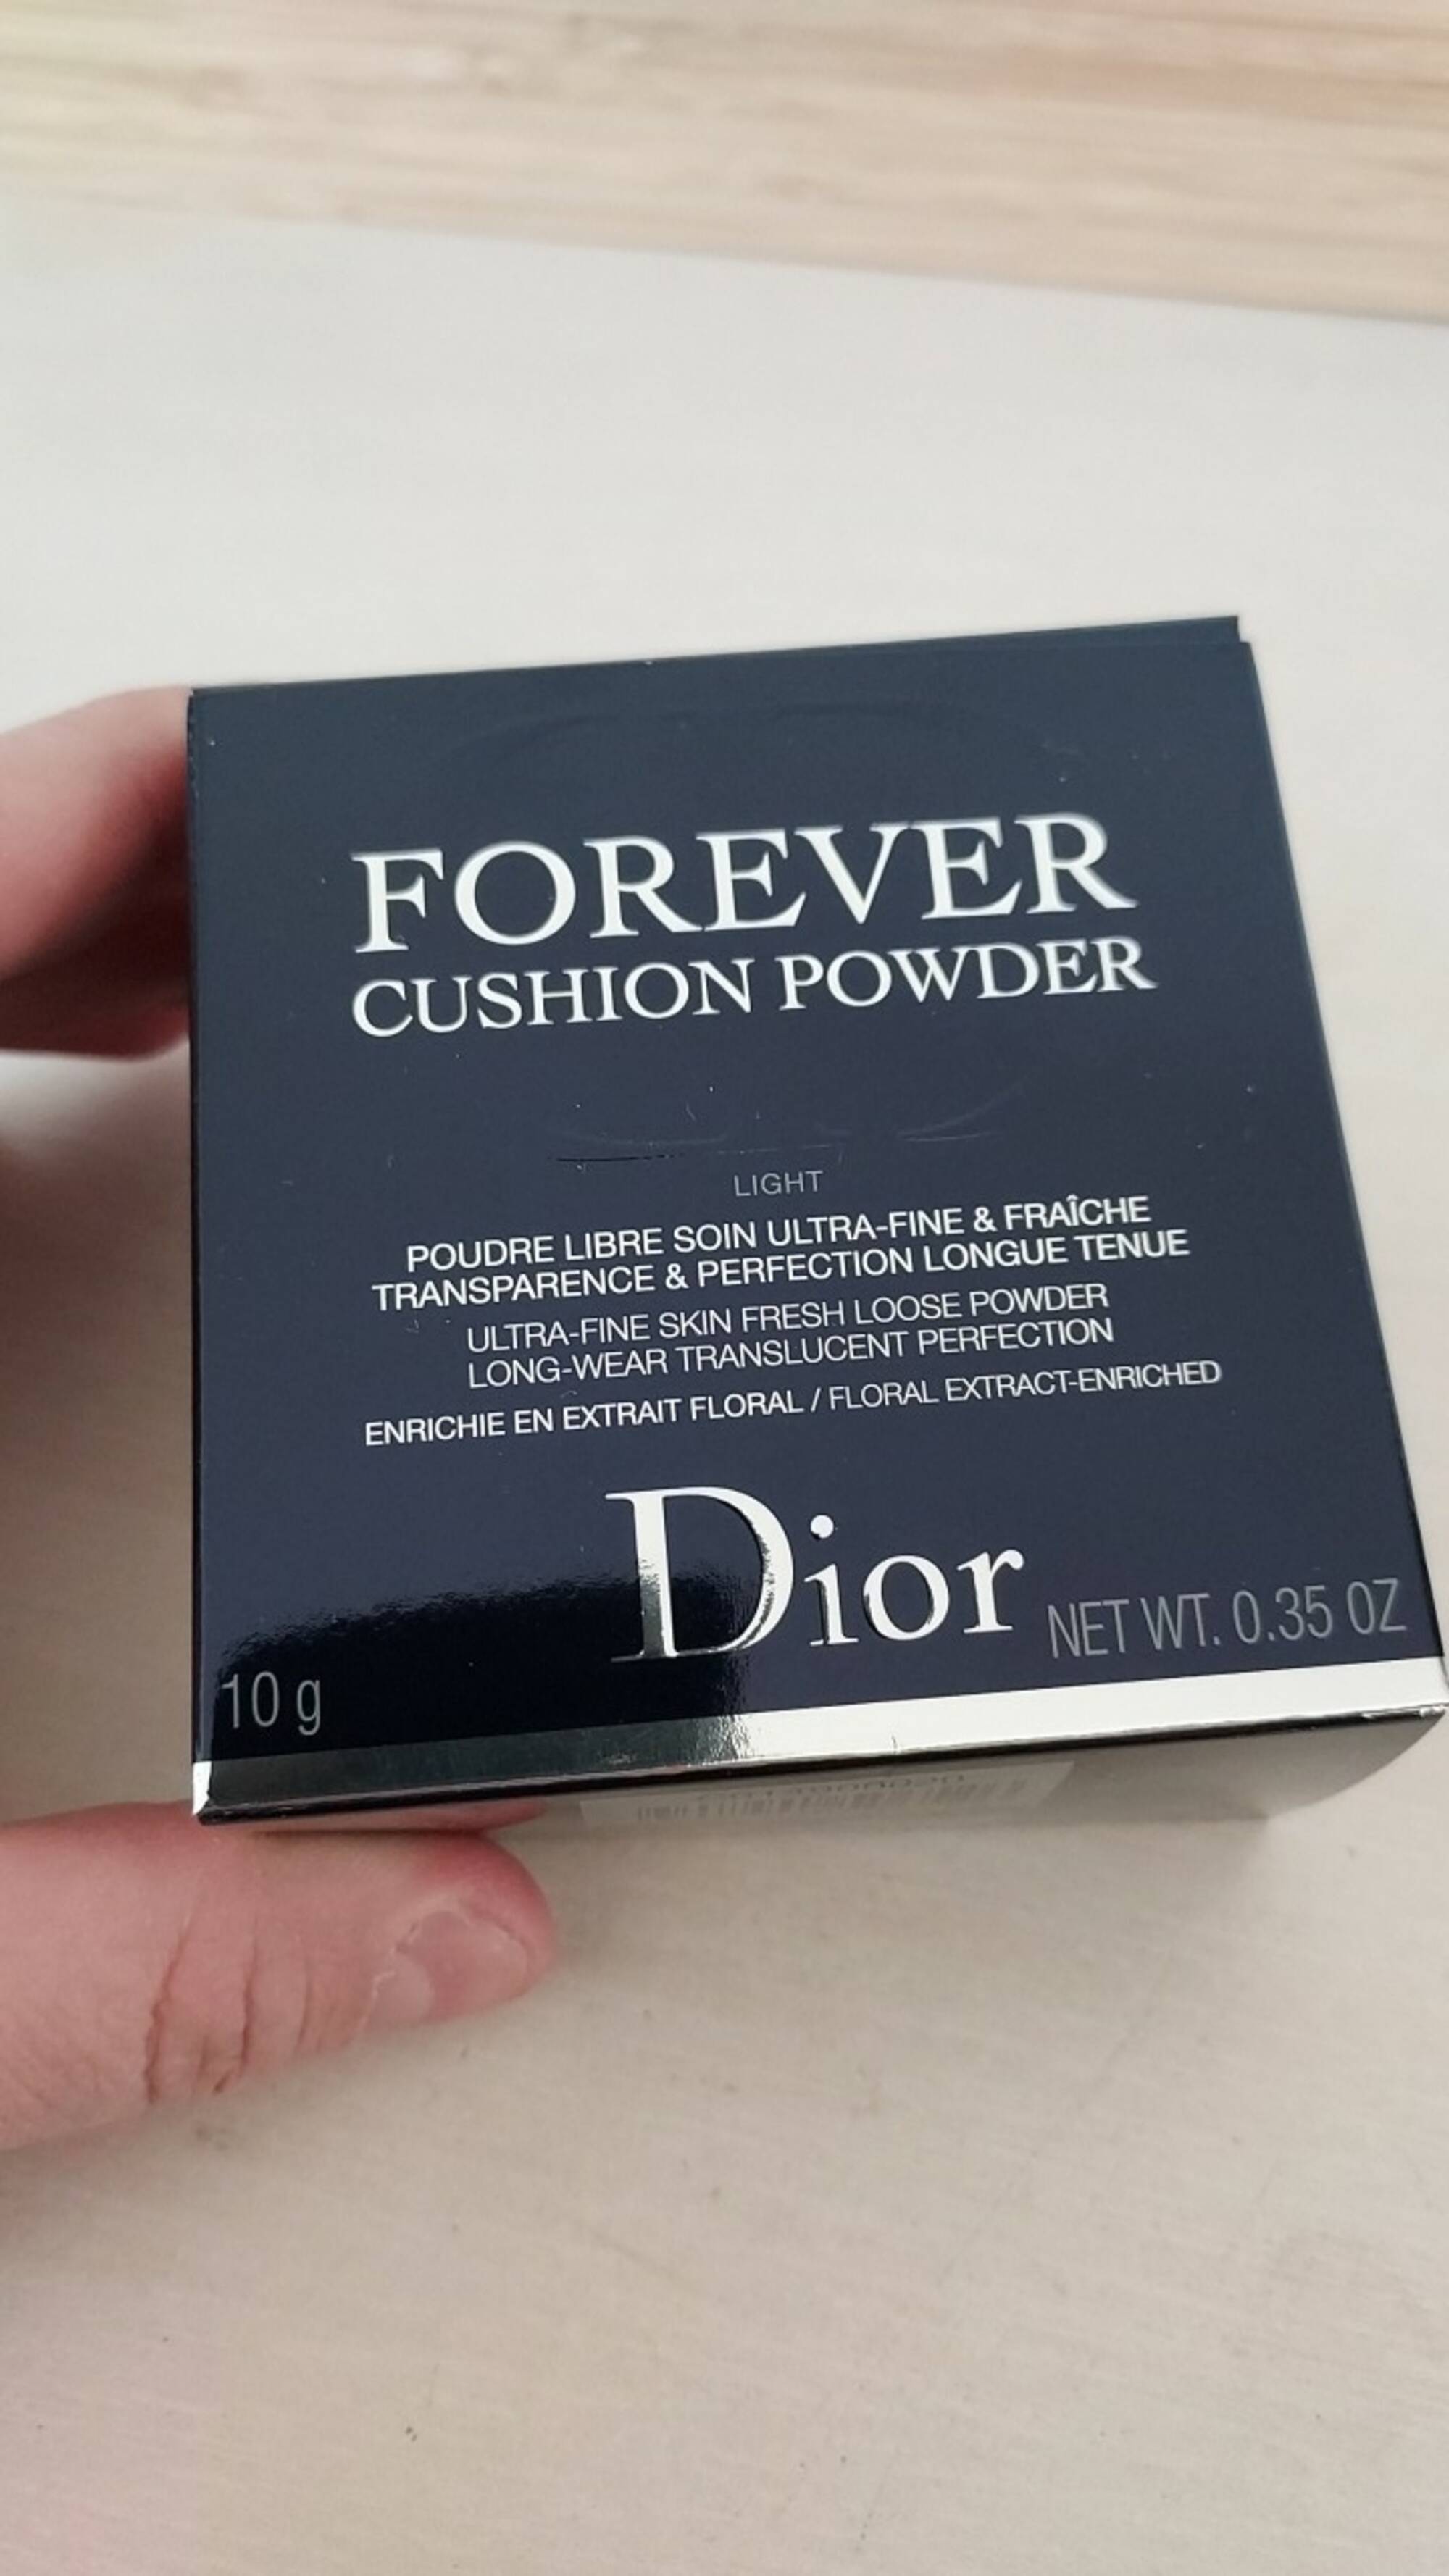 DIOR - Forever cushion powder - Poudre libre soin ultra-fine & fraîche